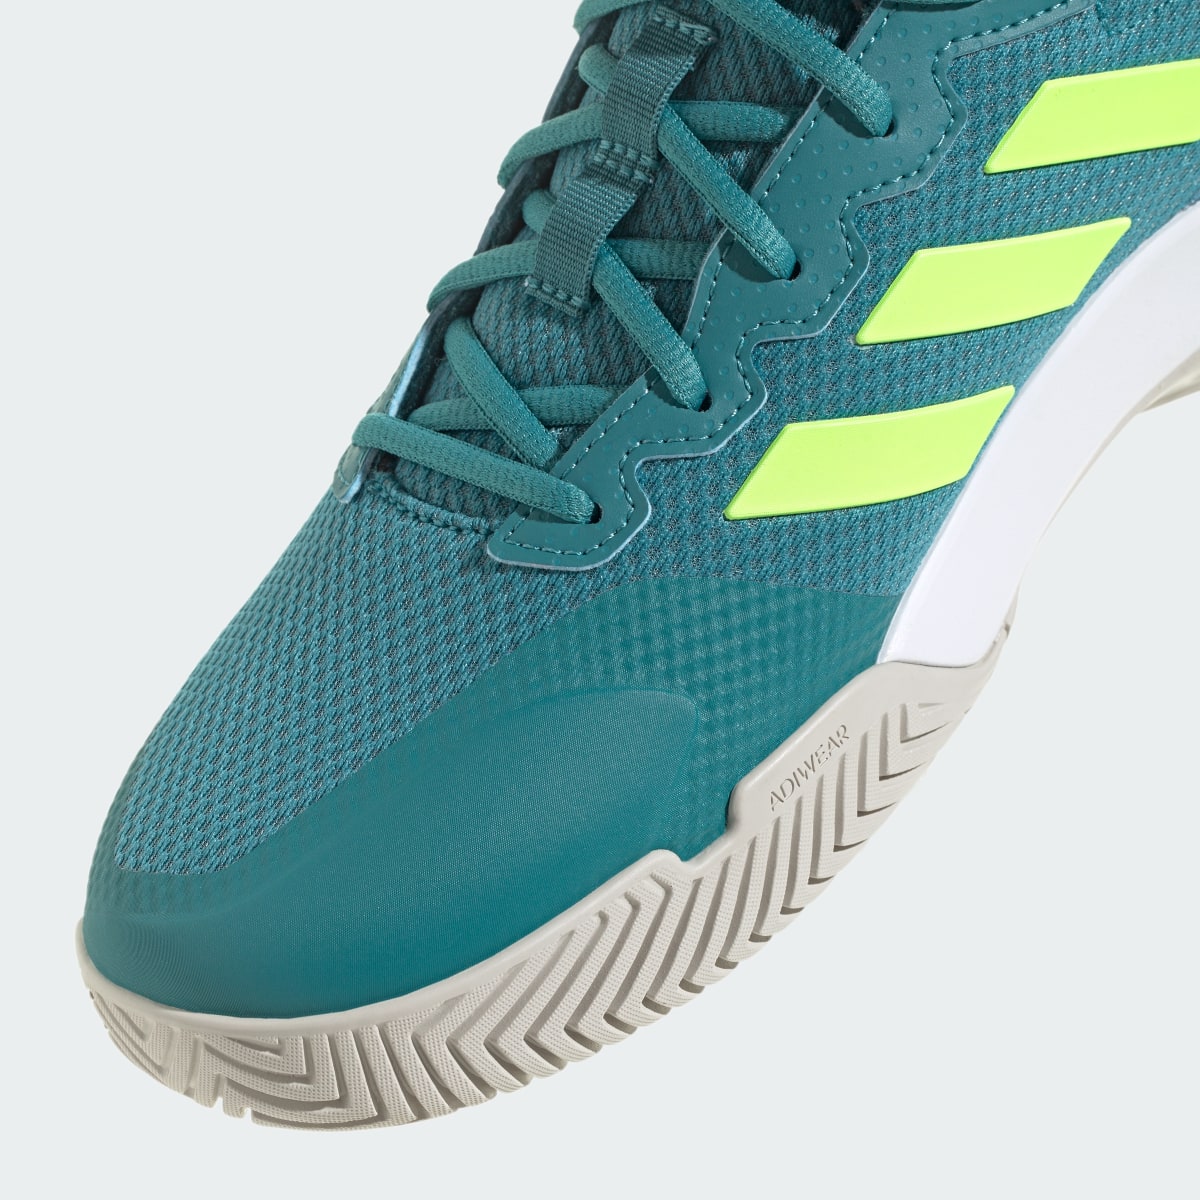 Adidas Gamecourt 2.0 Tennis Shoes. 10